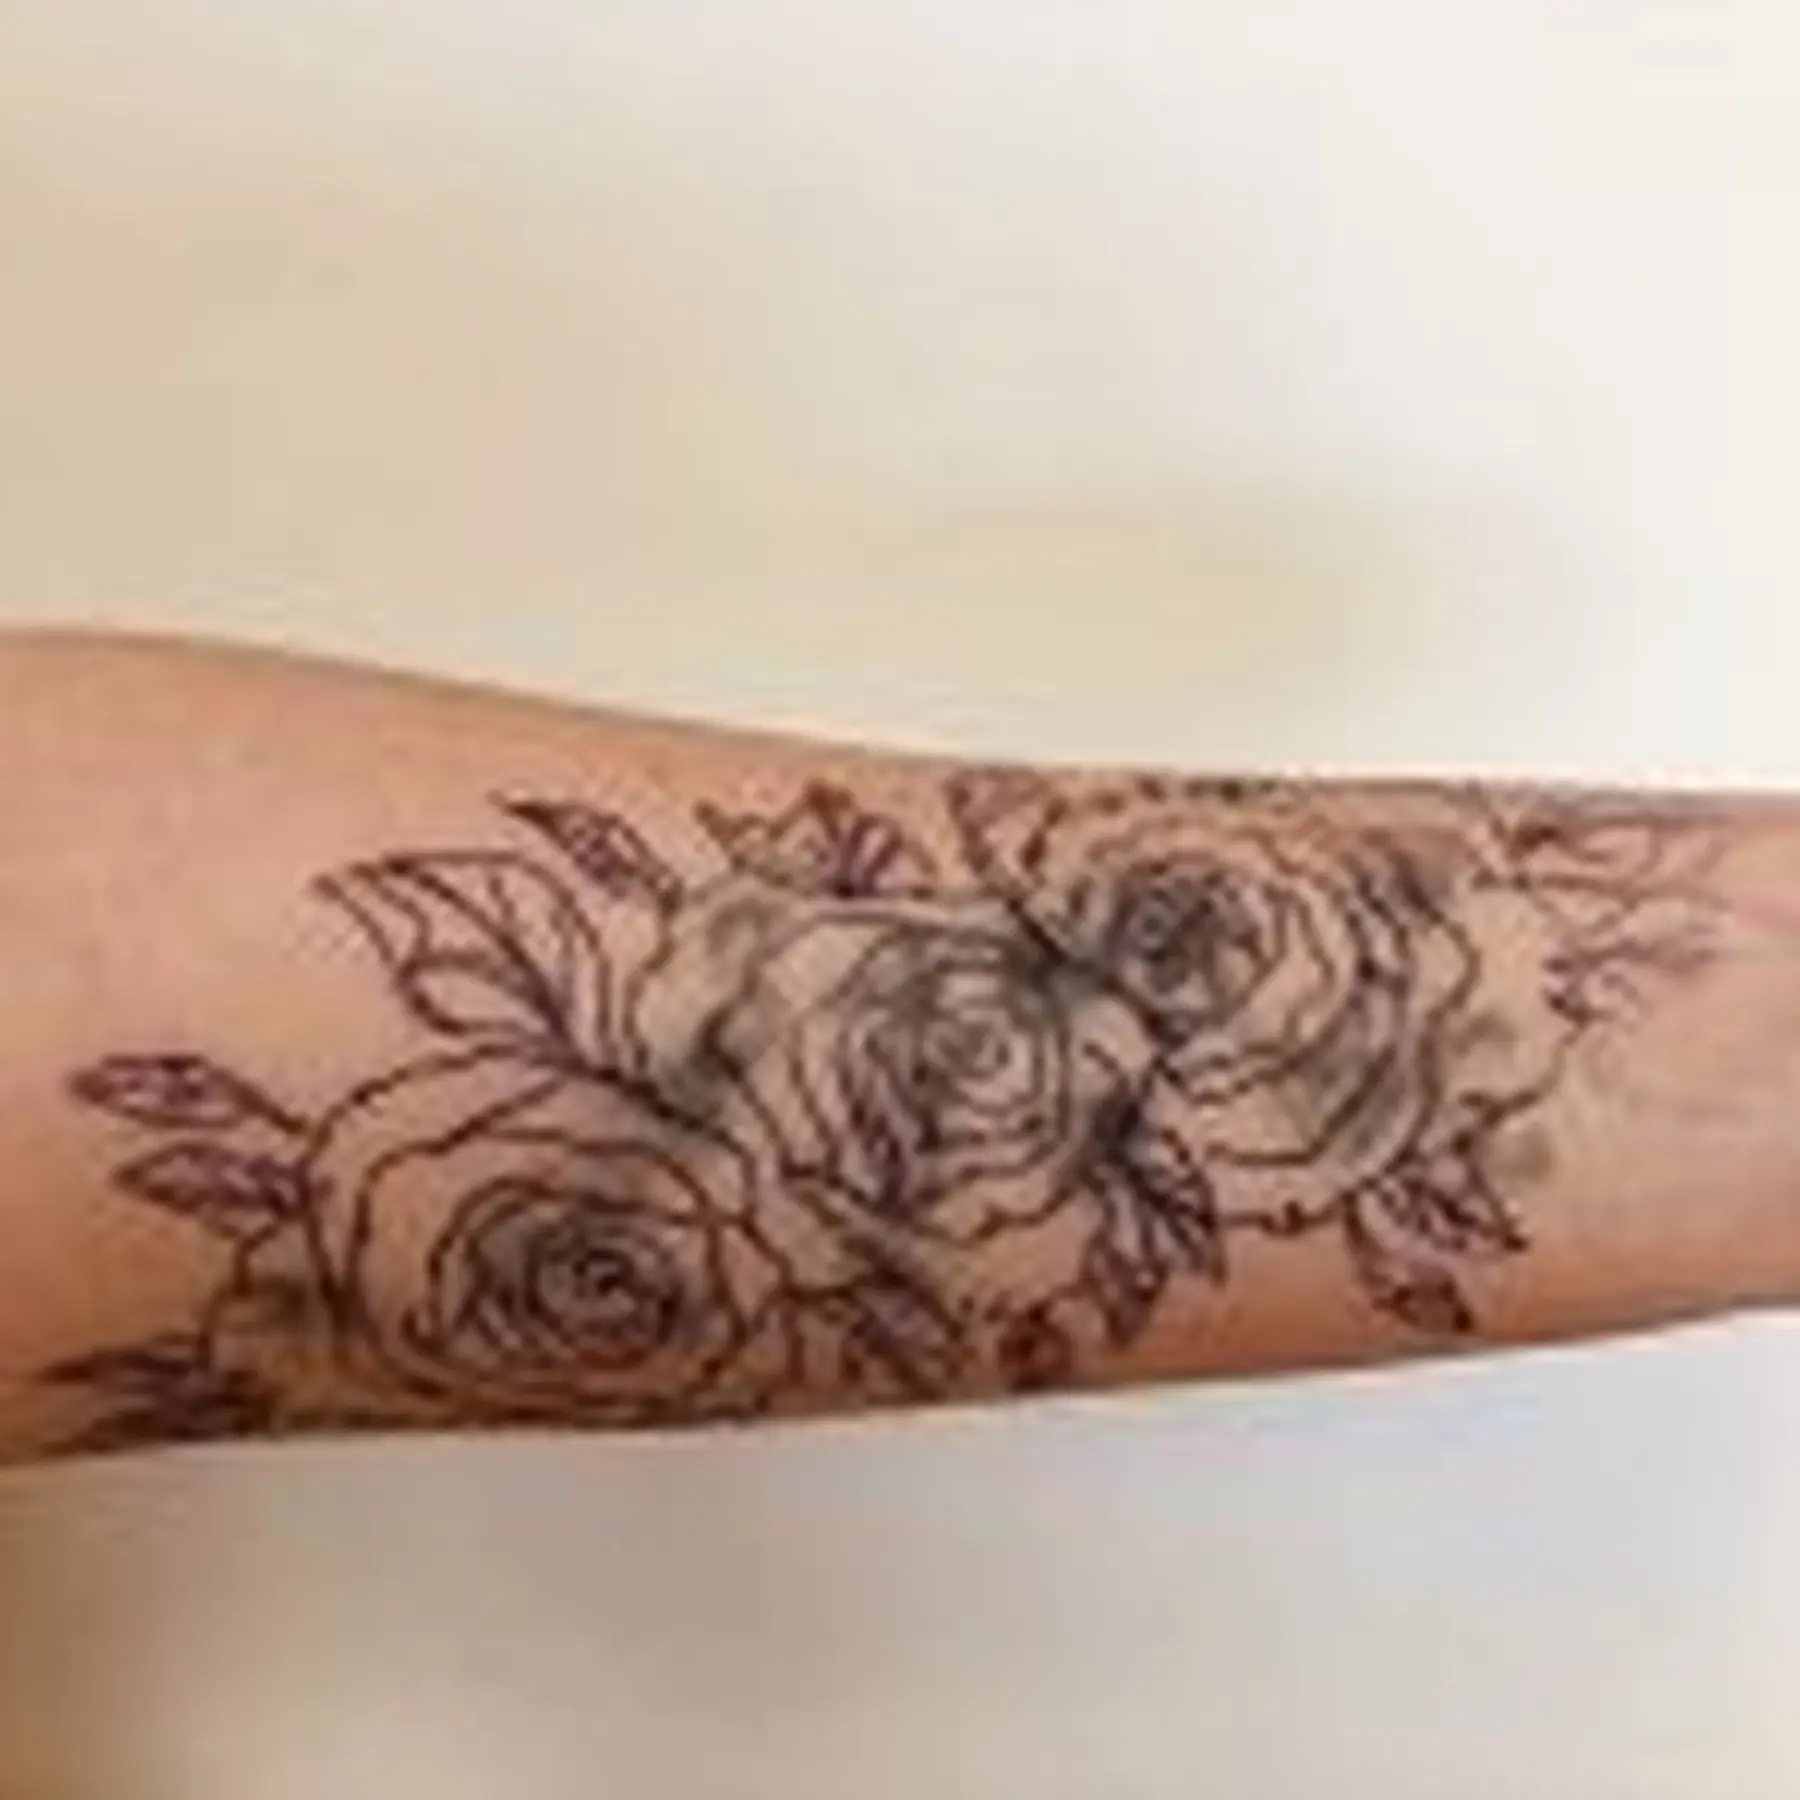 Ingesś Tattoo&Piercing Stübchen Tattoo am Arm